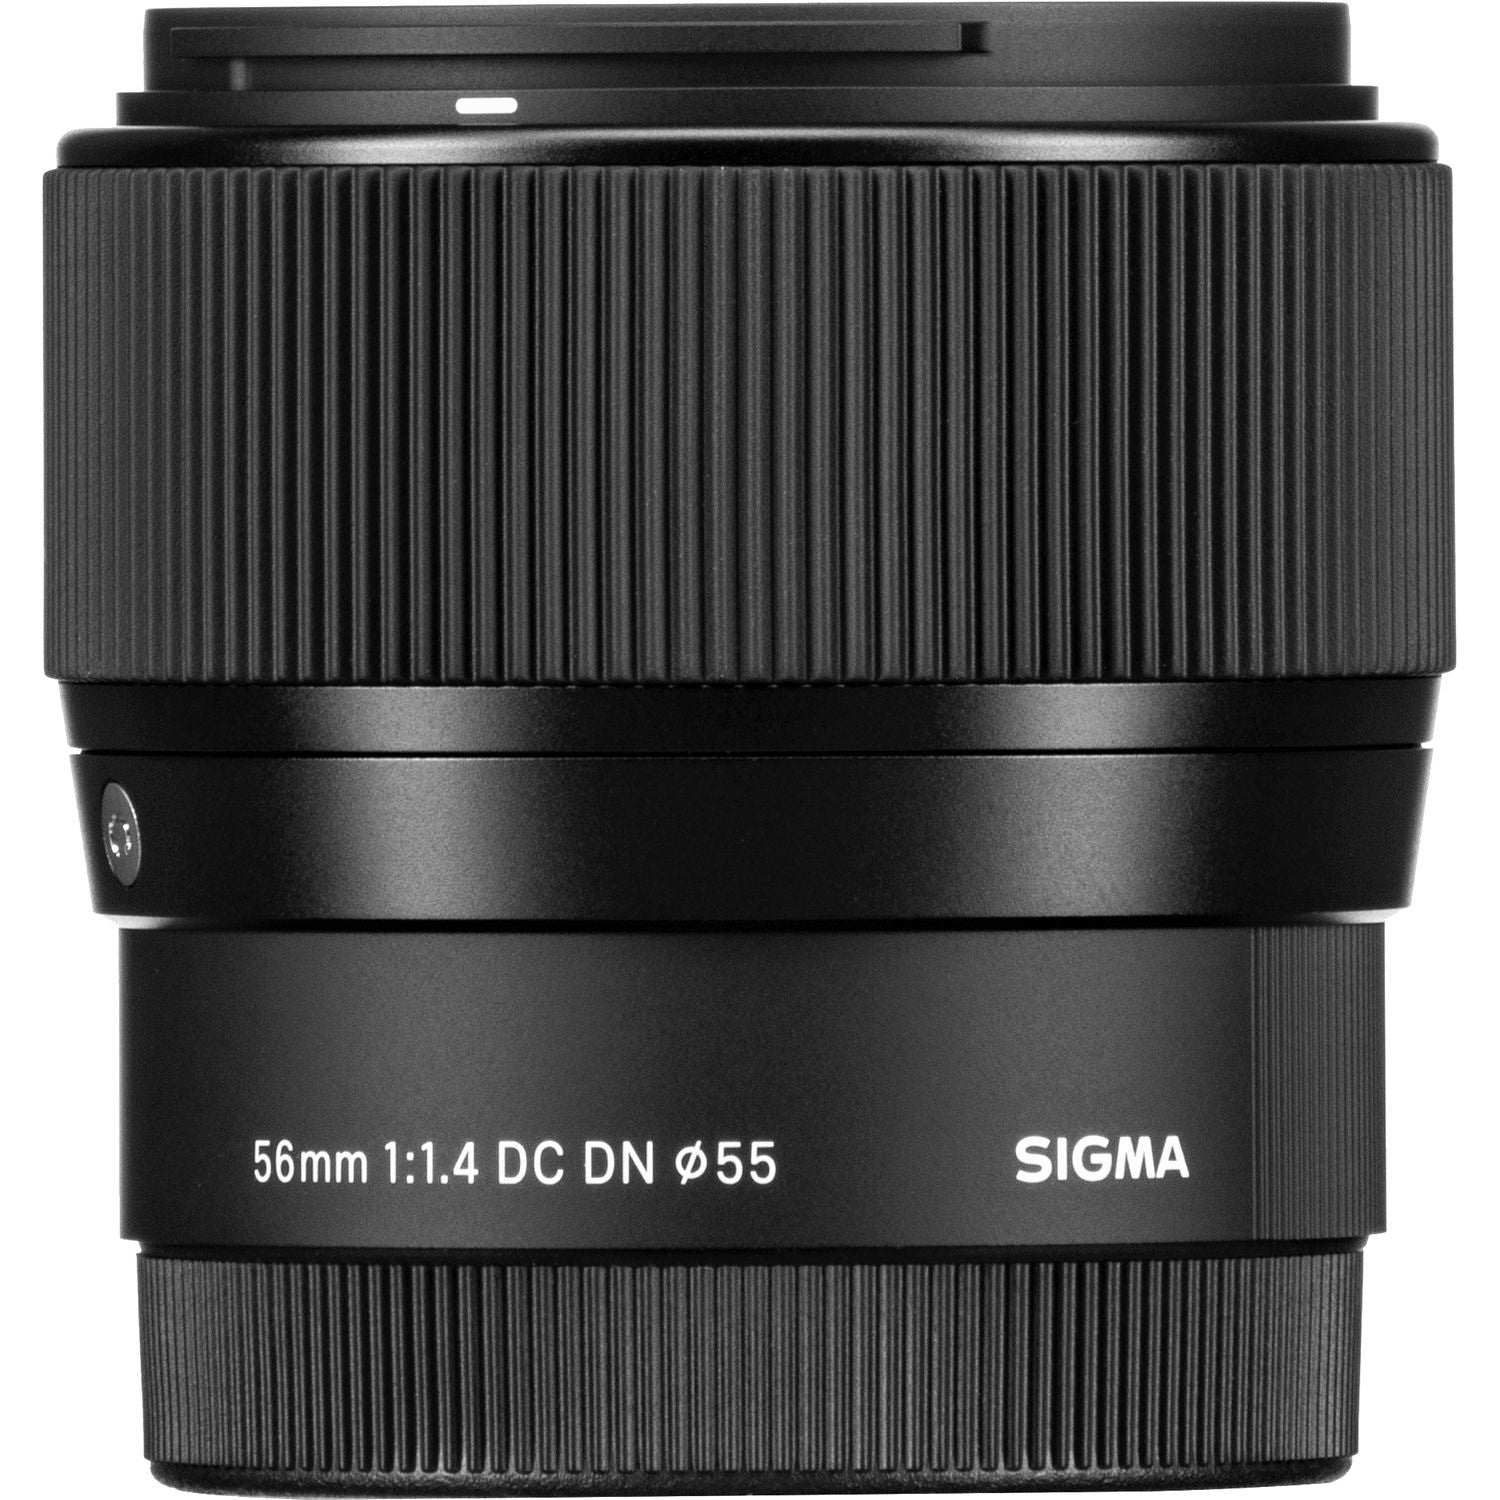 Sigma 30mm f/1.4 DC DN Contemporary Lens - Sony E Mount